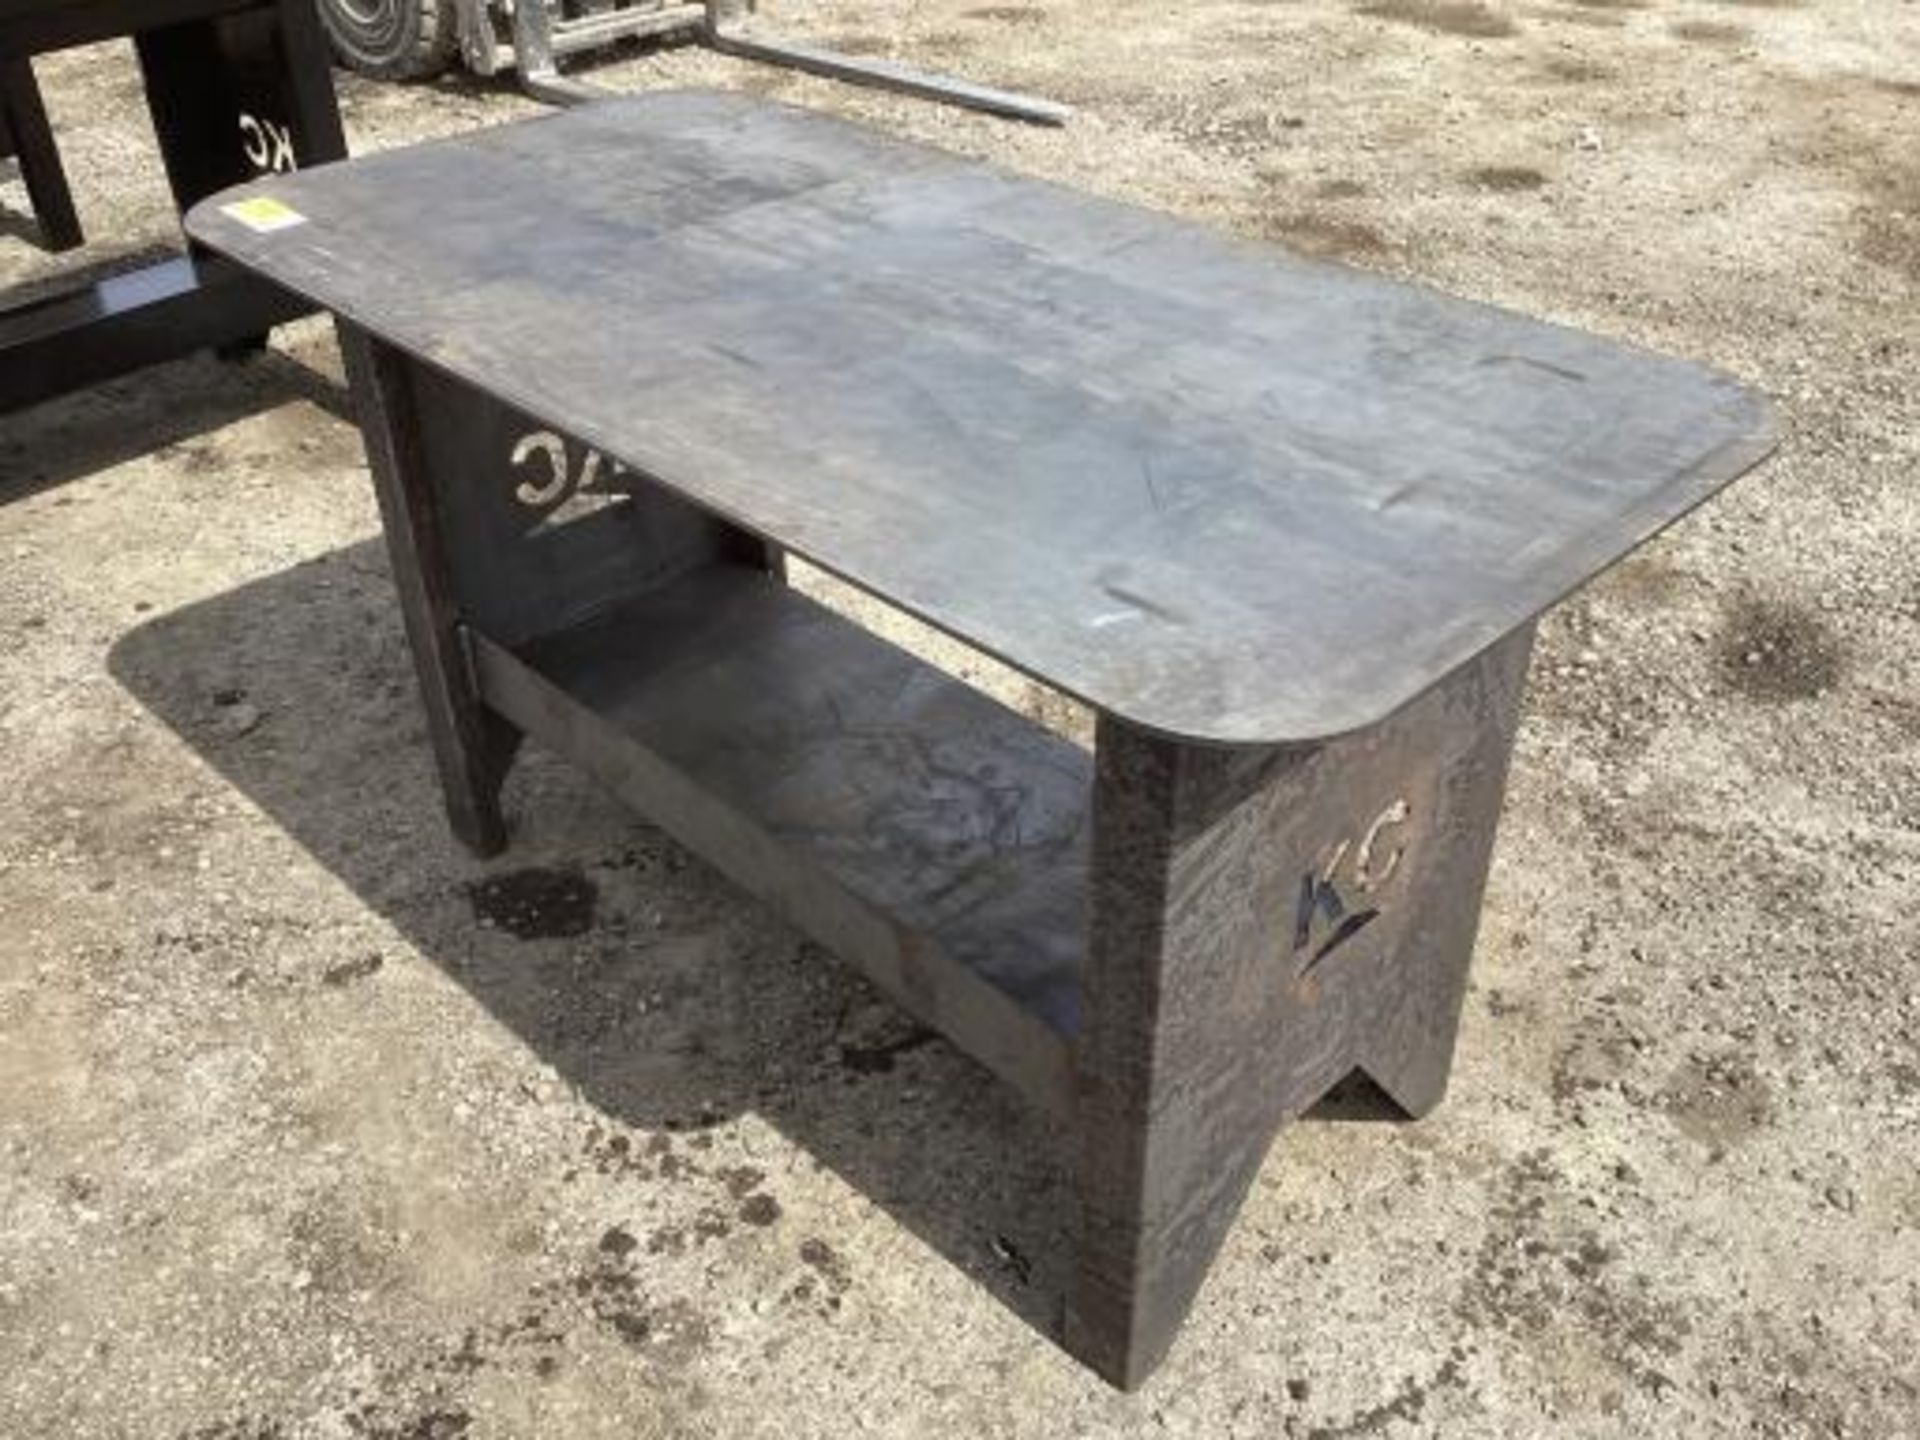 30" x 57" Kc Welding Table - Image 2 of 6